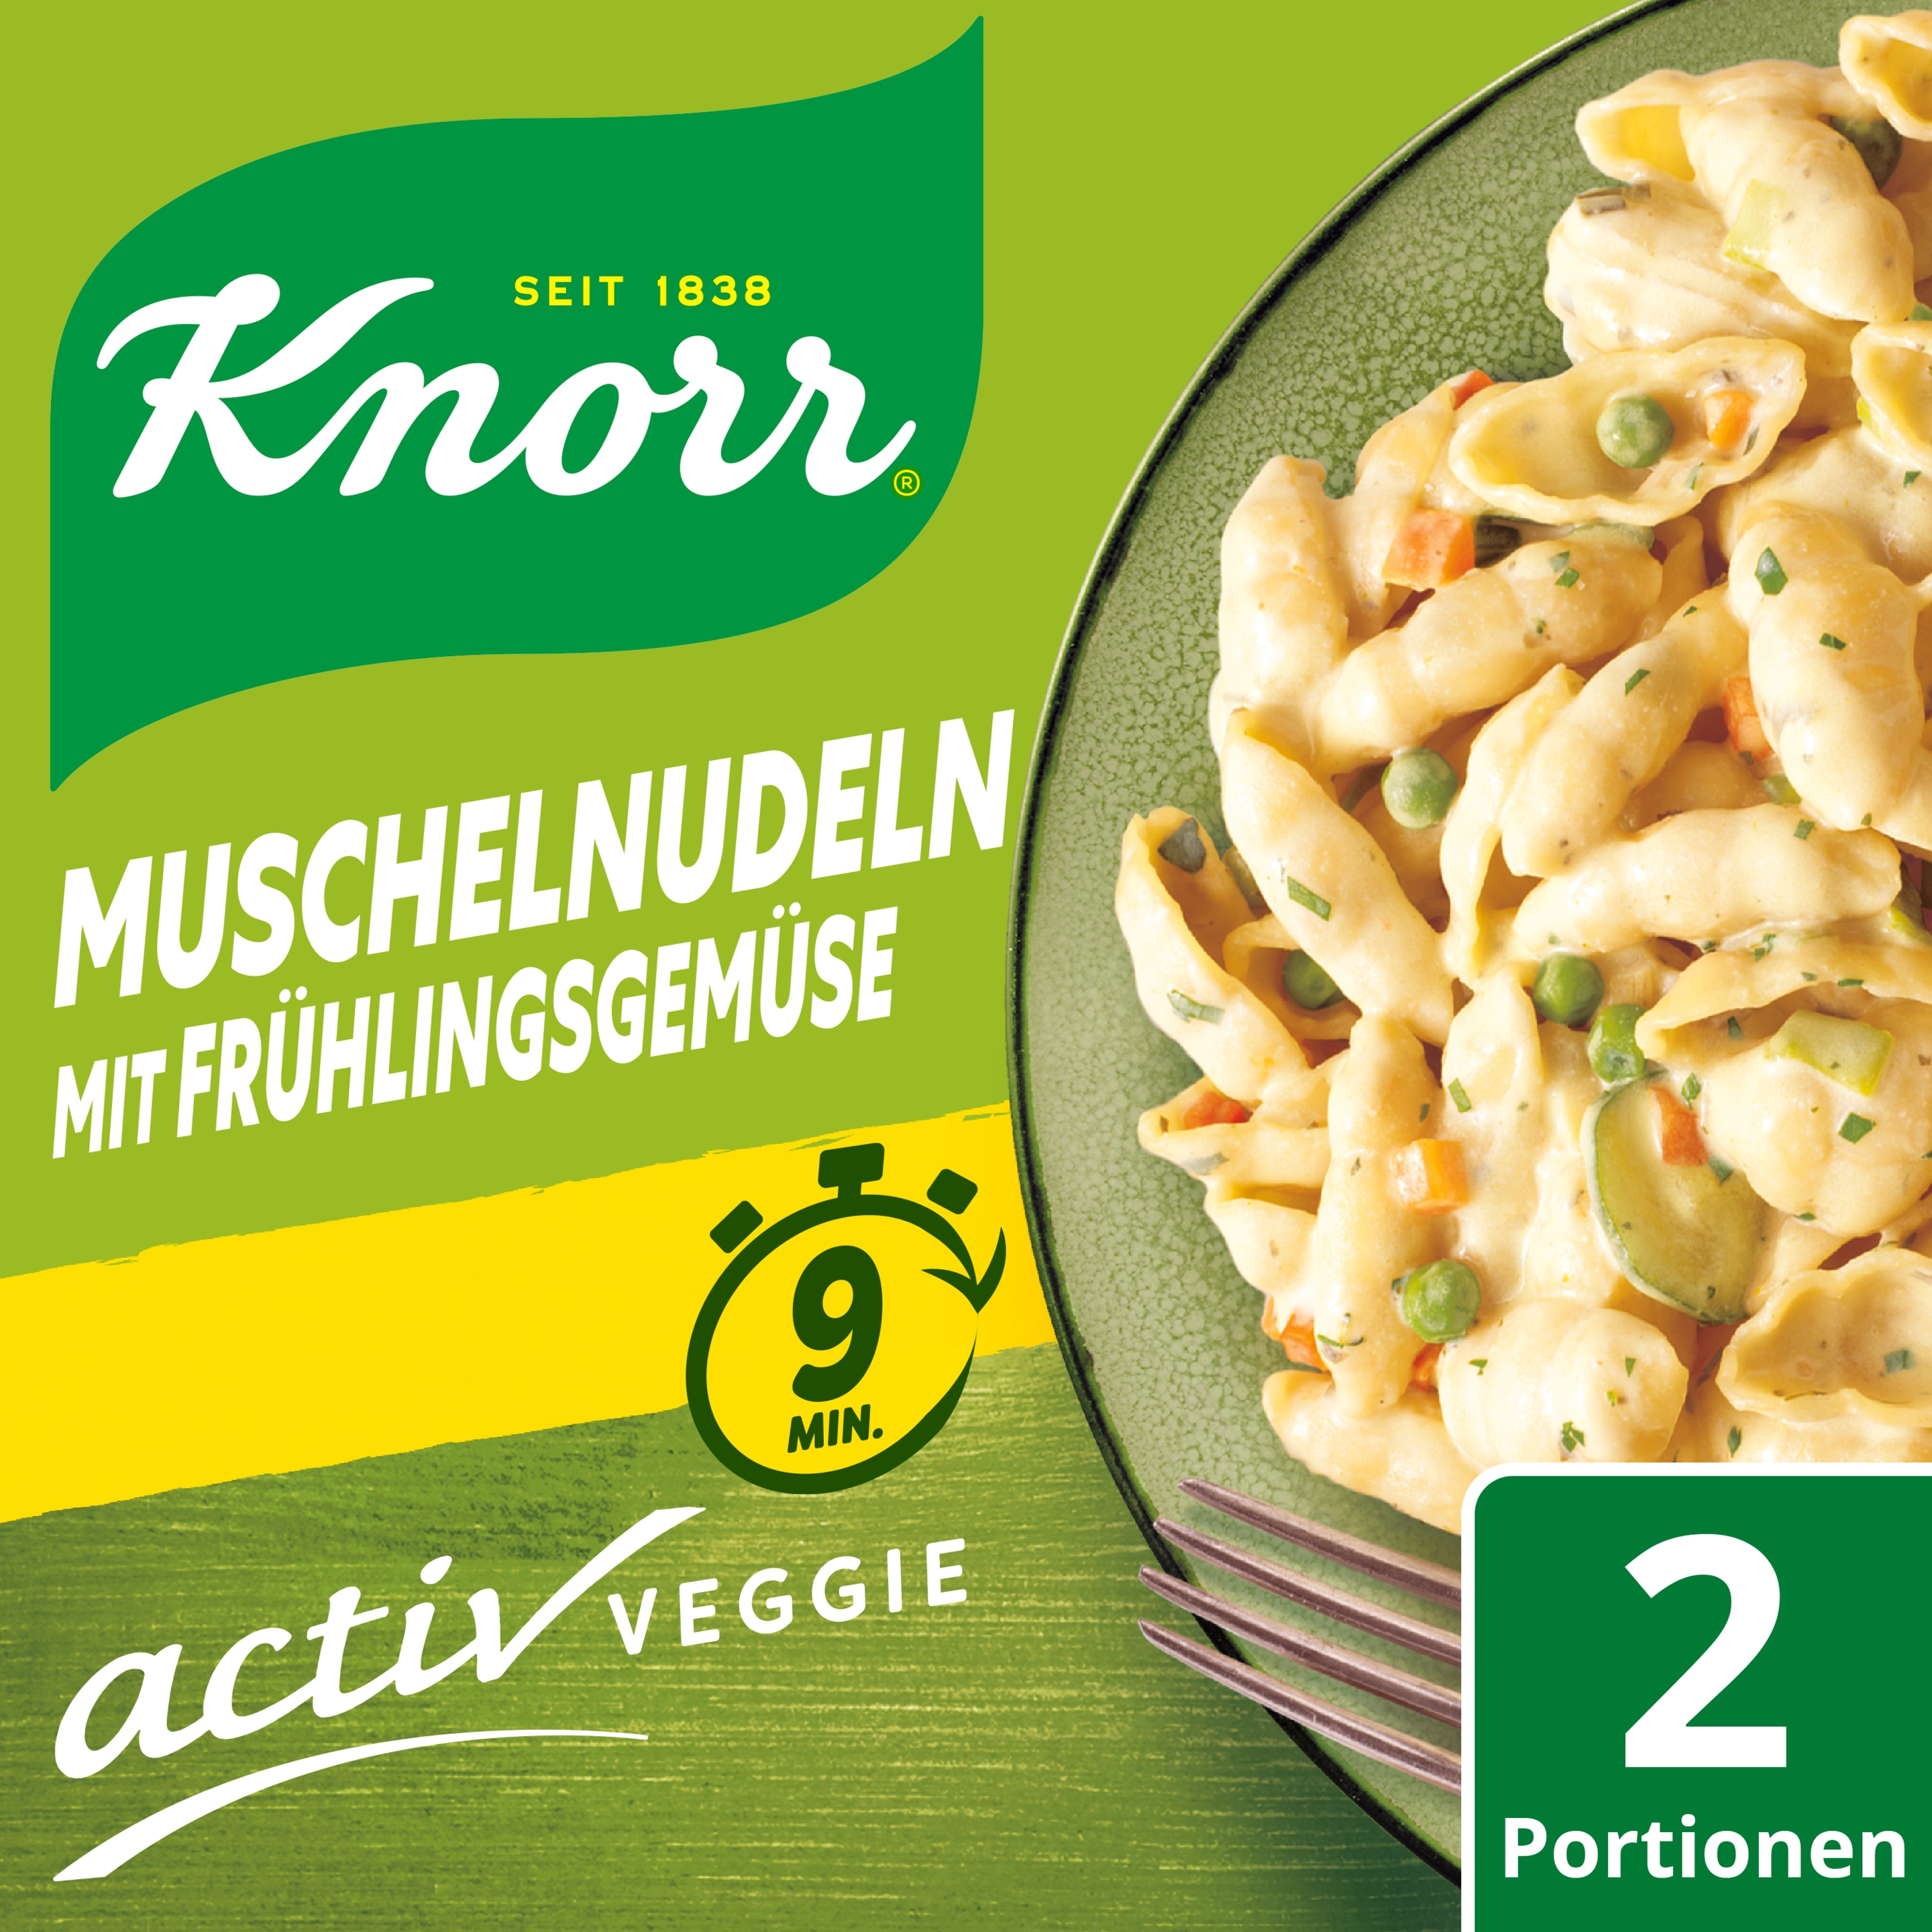 Knorr Activ Veggie Muschelnudeln mit Frühlingsgemüse